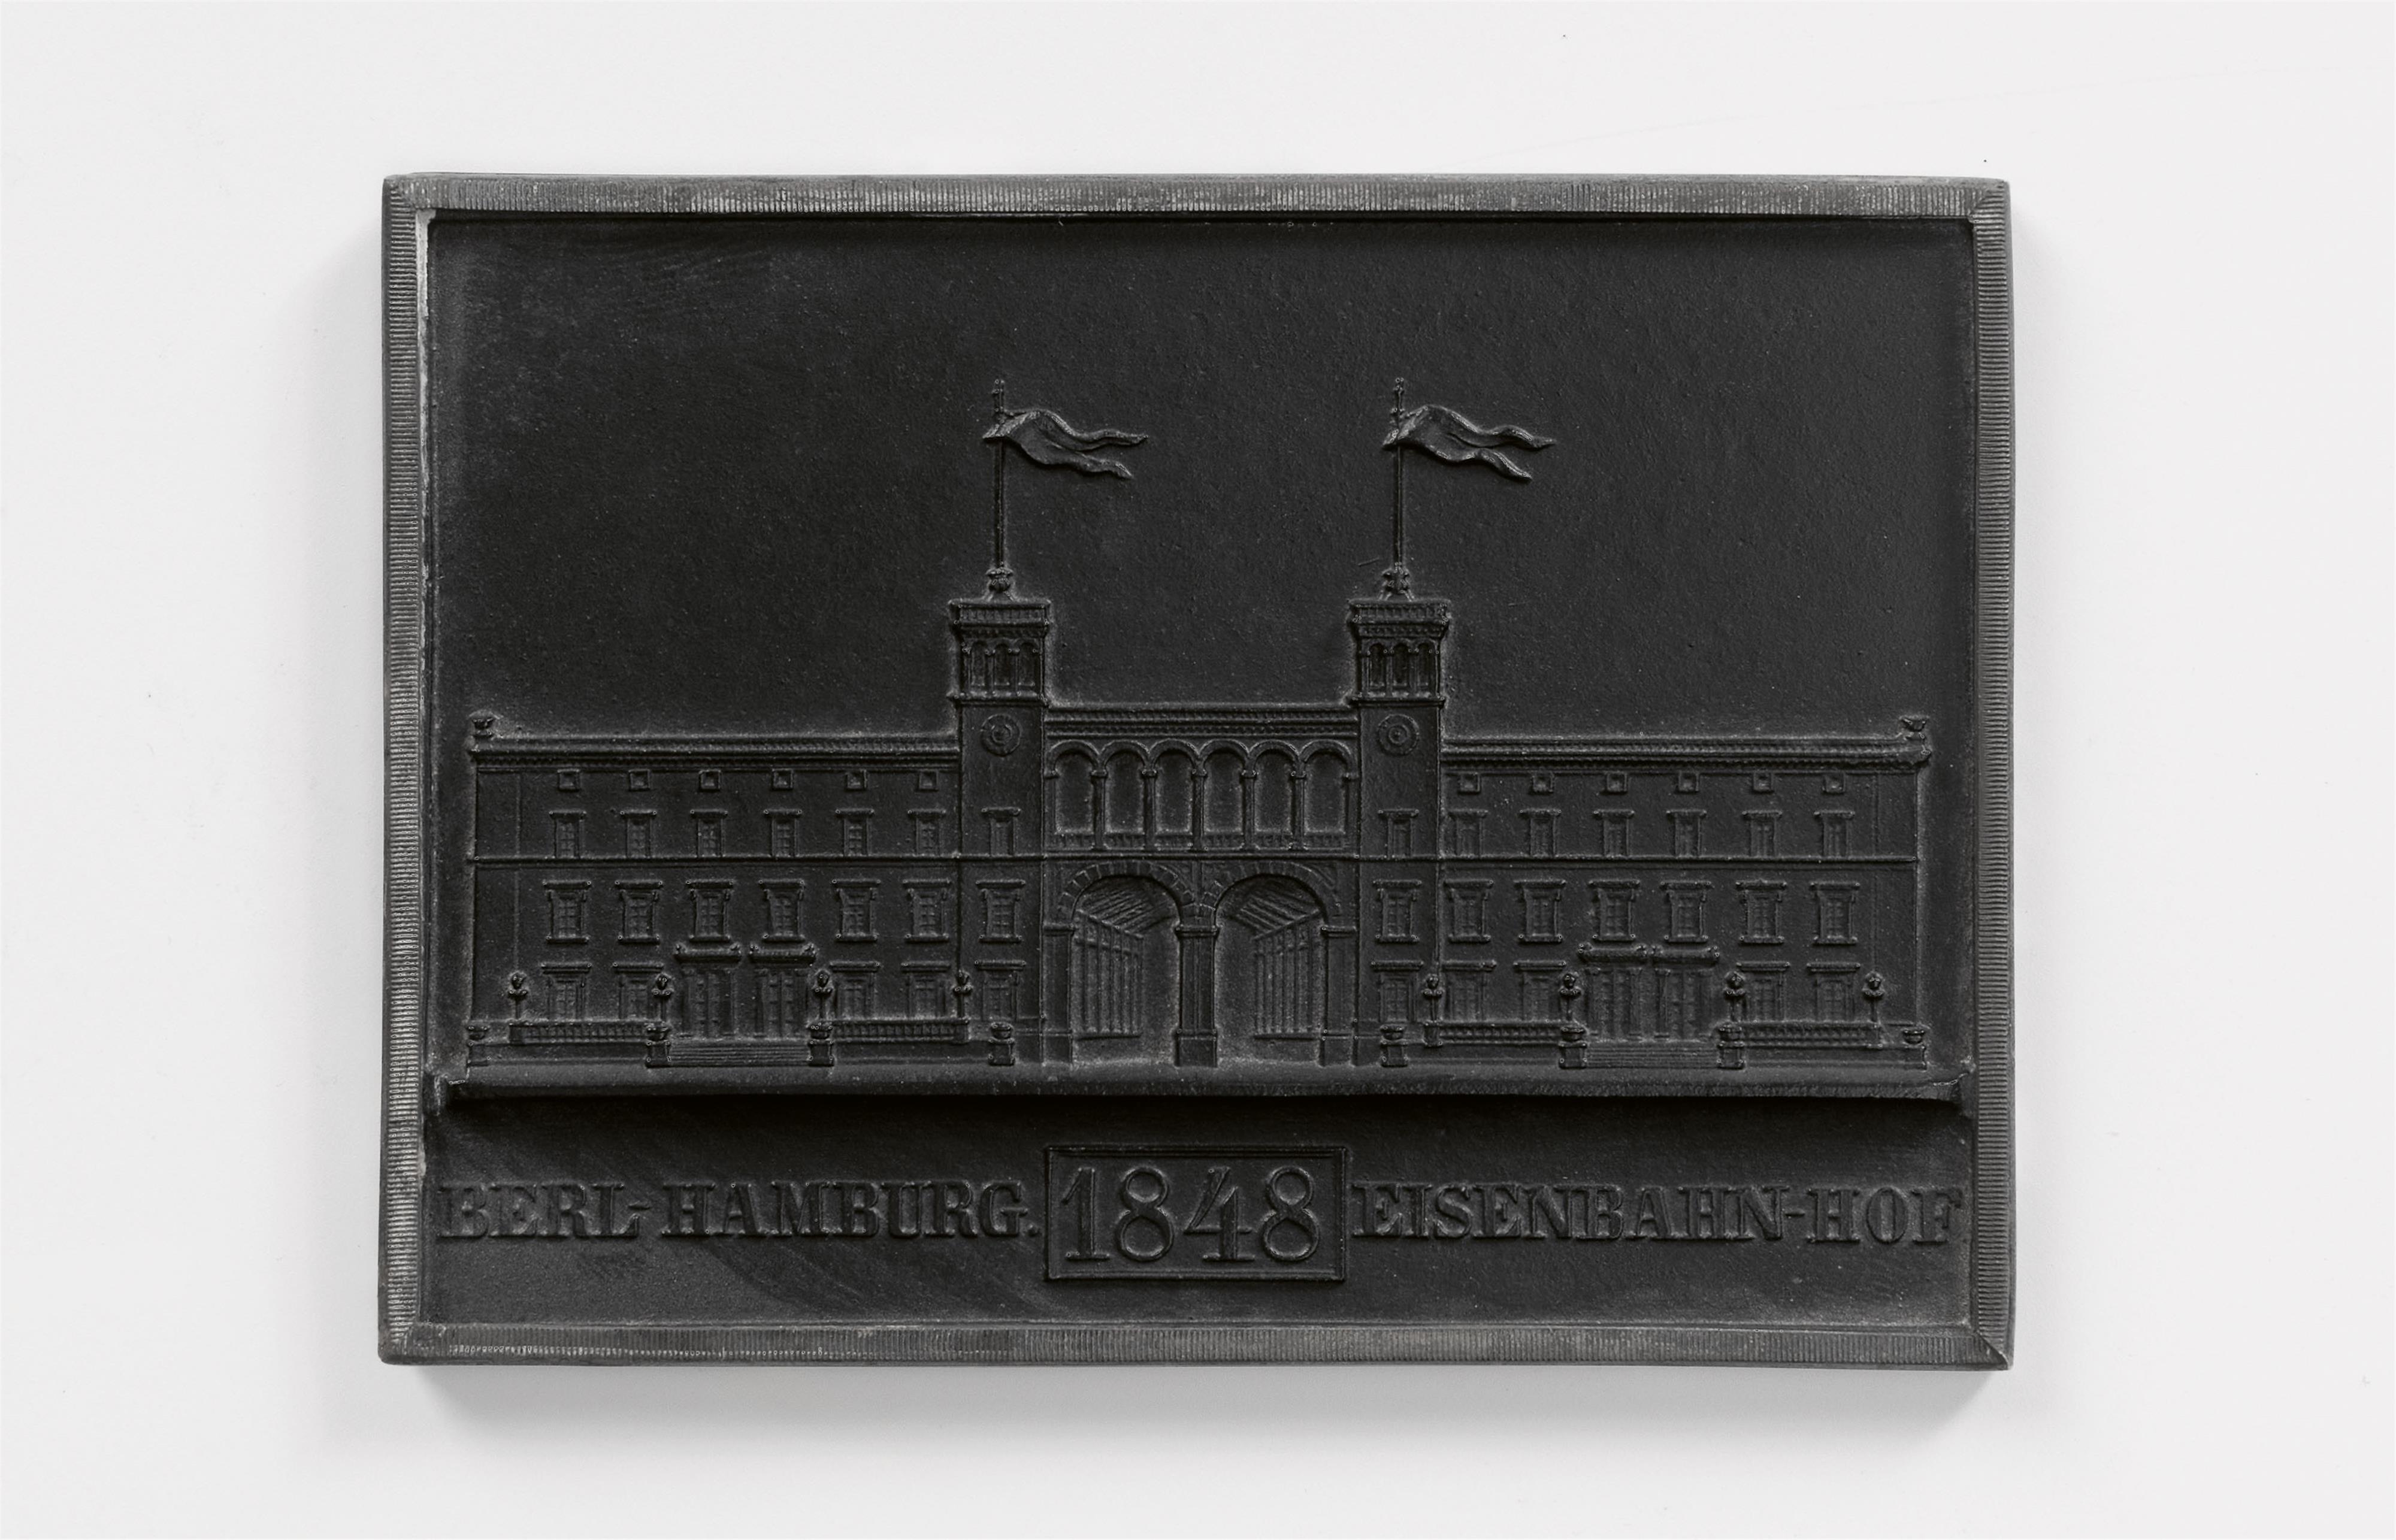 A cast iron New Year's plaque inscribed "BERL- HAMBURG. 1848 EISENBAHN-HOF" - image-1